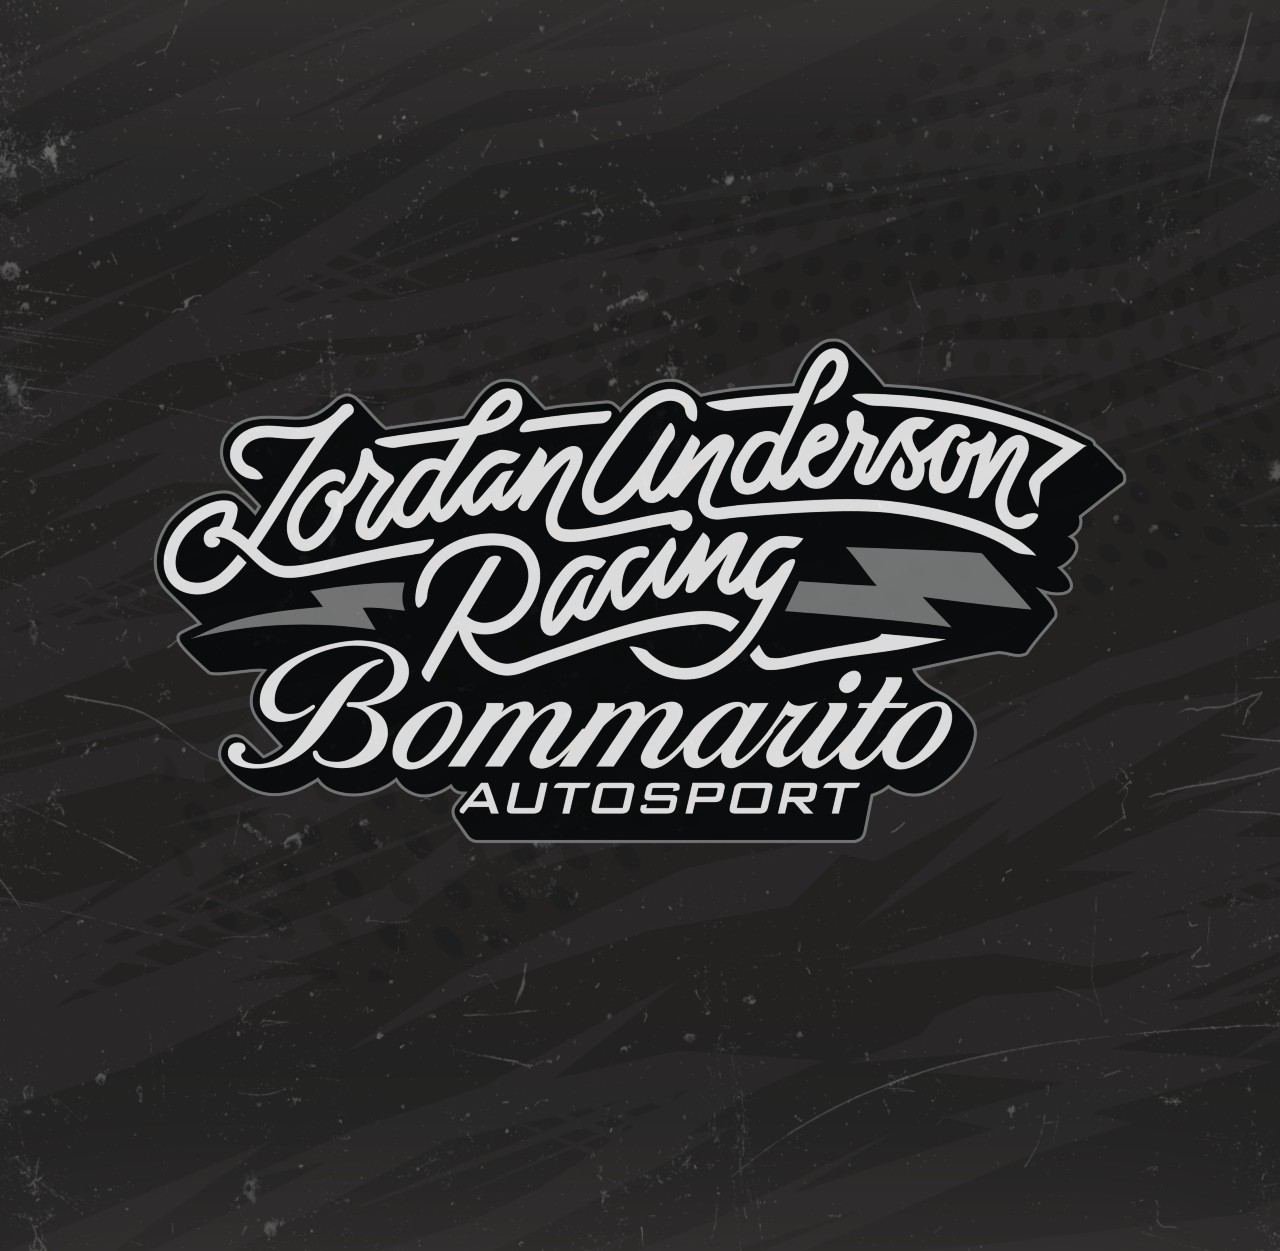 Jordan Anderson Racing Bommarito Autosport Adds to Team Ahead of 2024